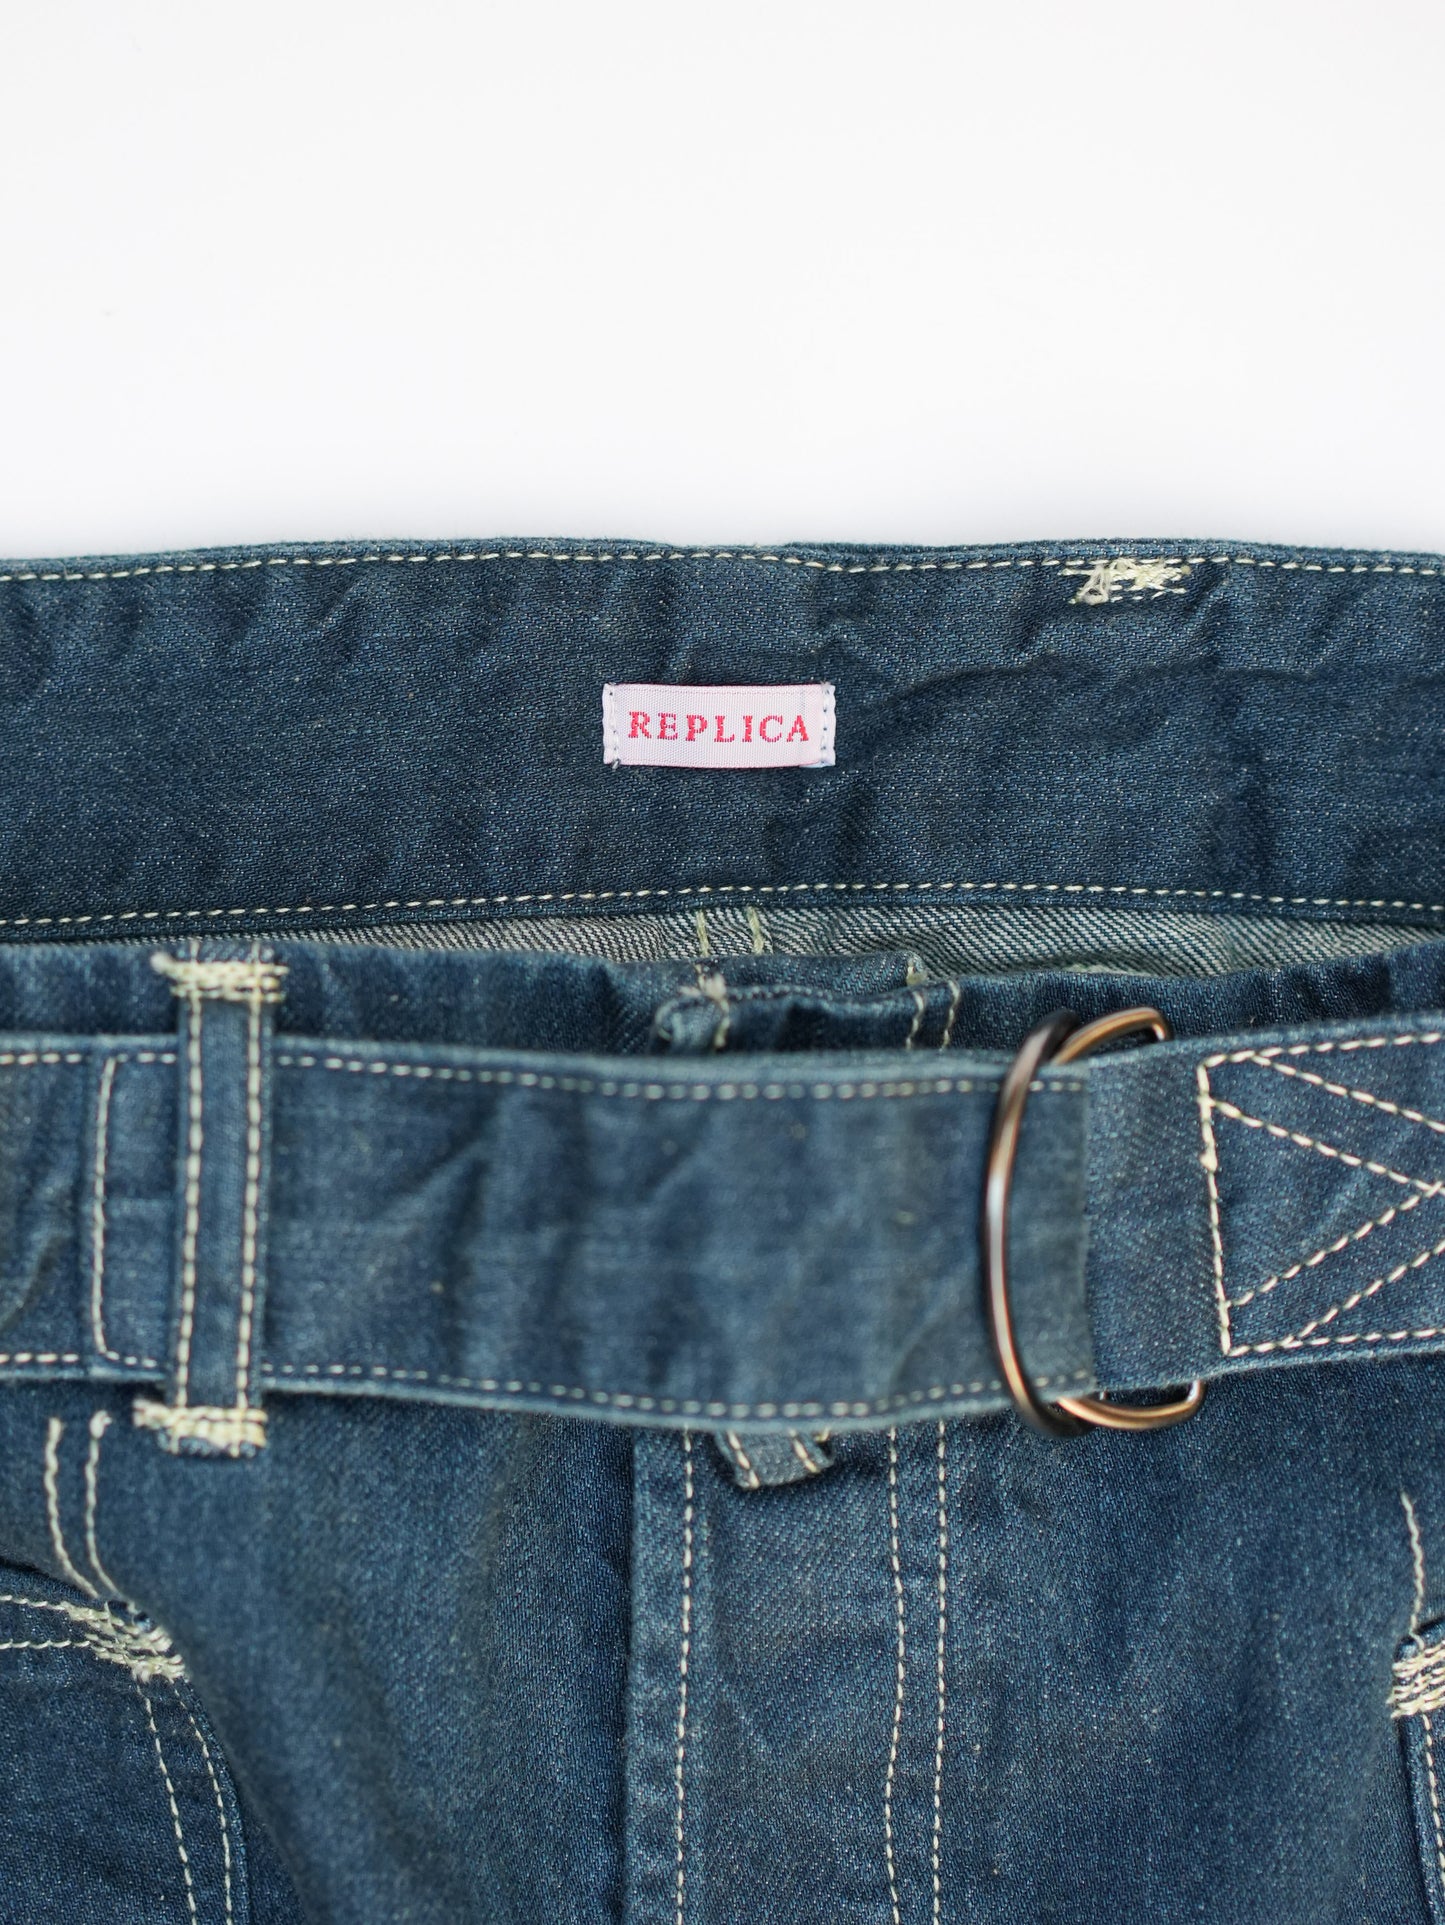 Replica Jeans - Strapped